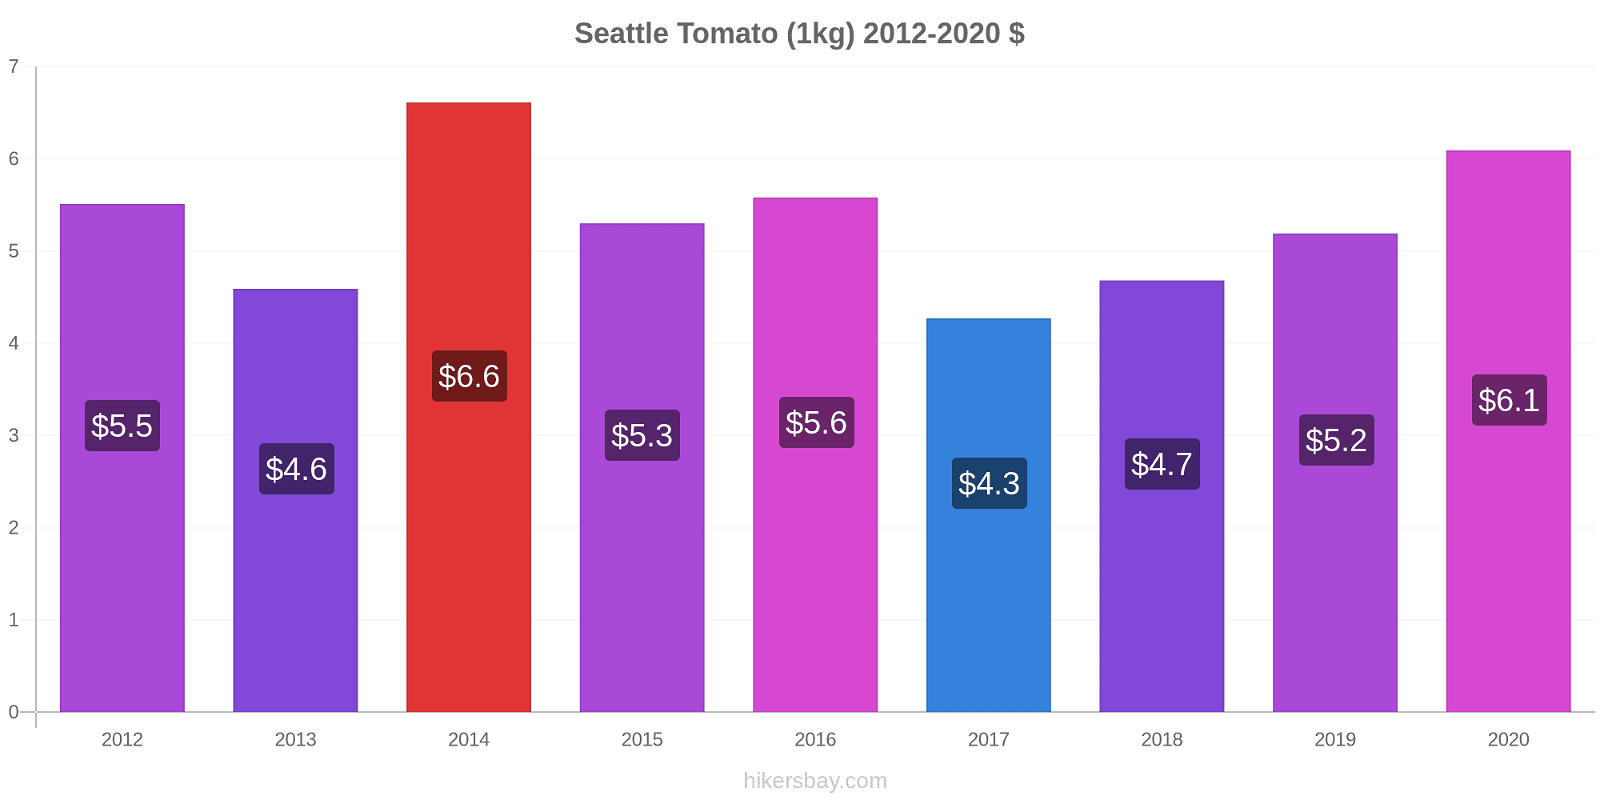 Seattle price changes Tomato (1kg) hikersbay.com